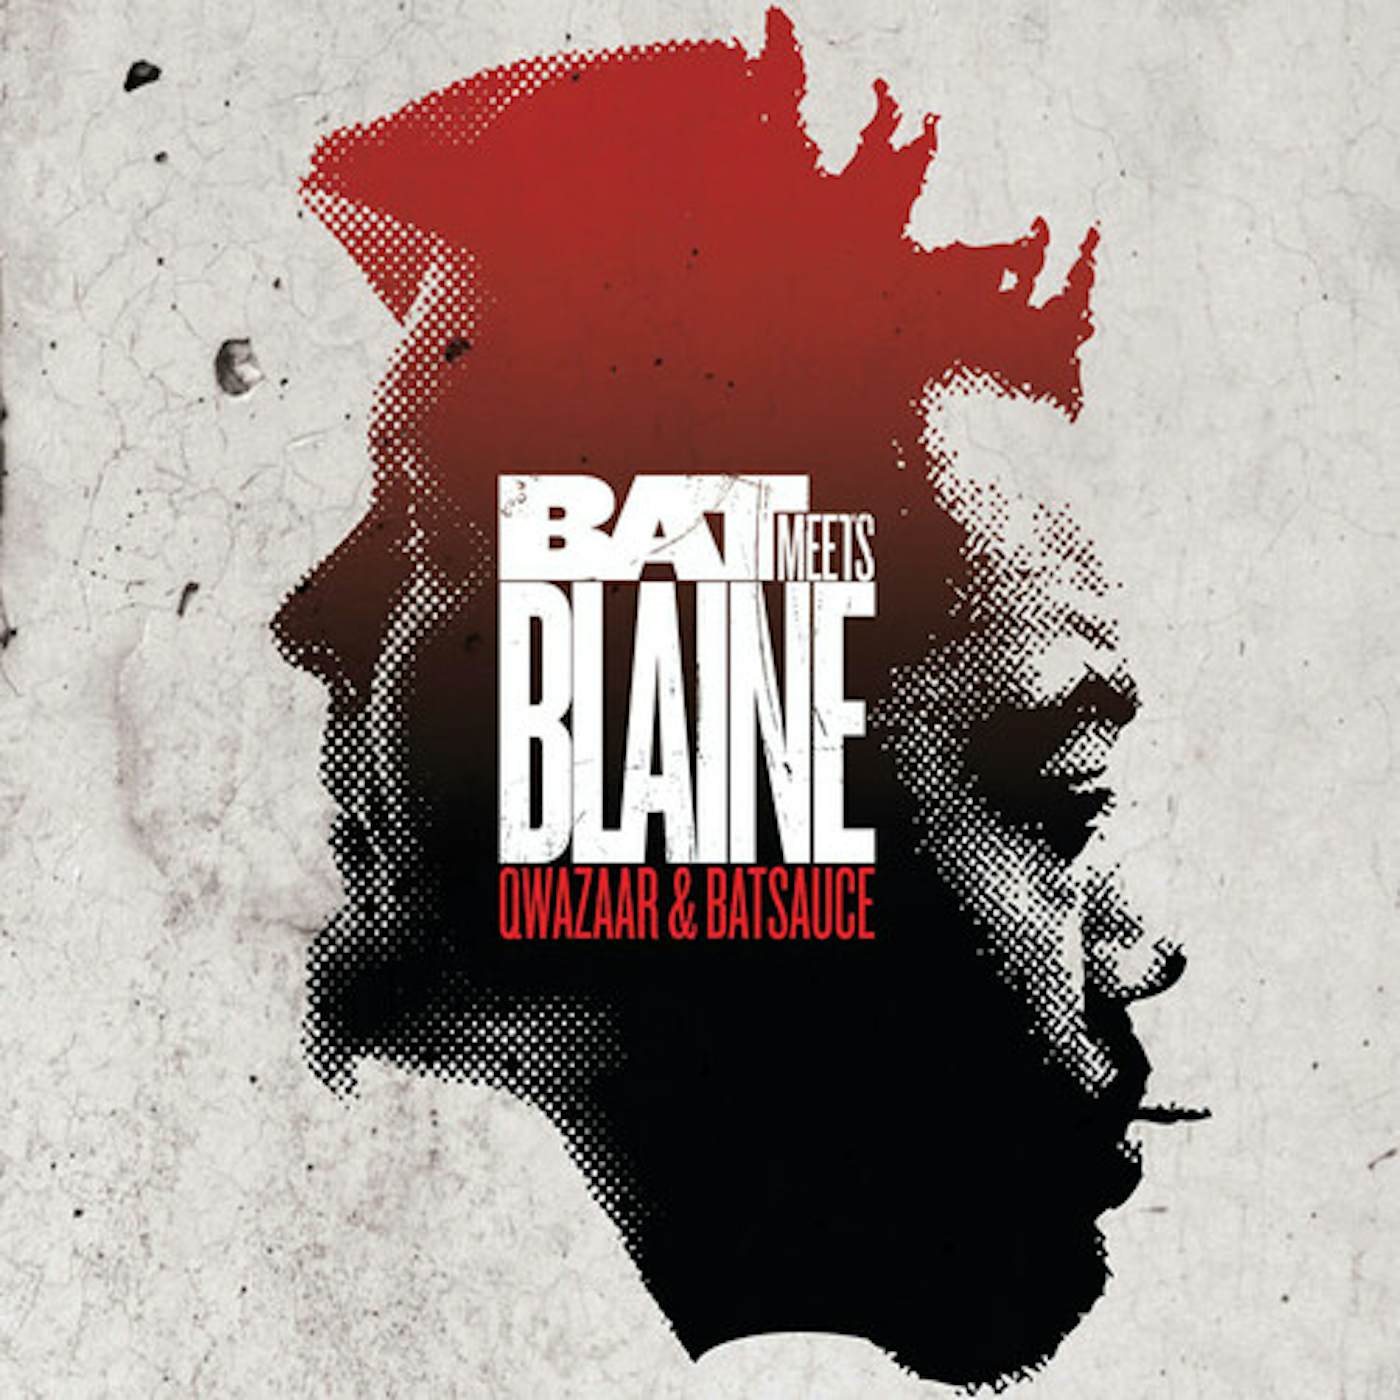 Qwazaar, Batsauce Bat Meets Blaine (10th Anniversary Edition) Vinyl Record